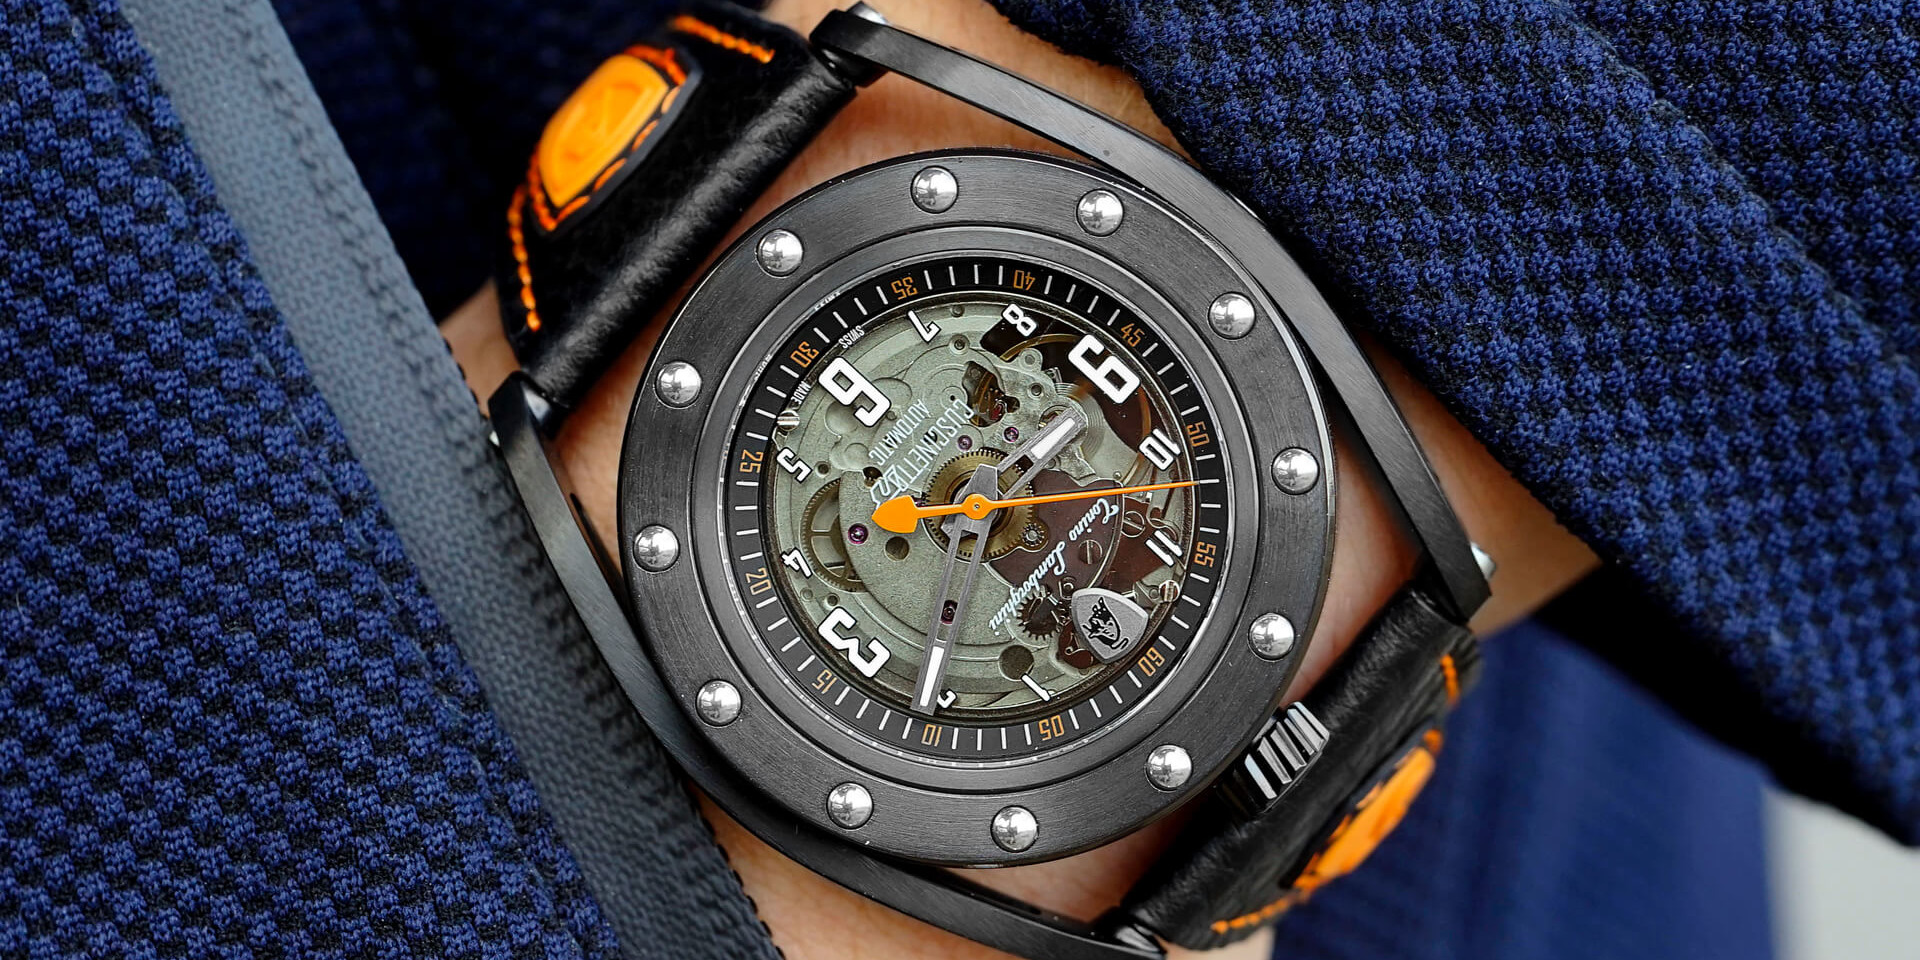 Tonino Lamborghini “Cuscinetto”: the Watch With Something Extra